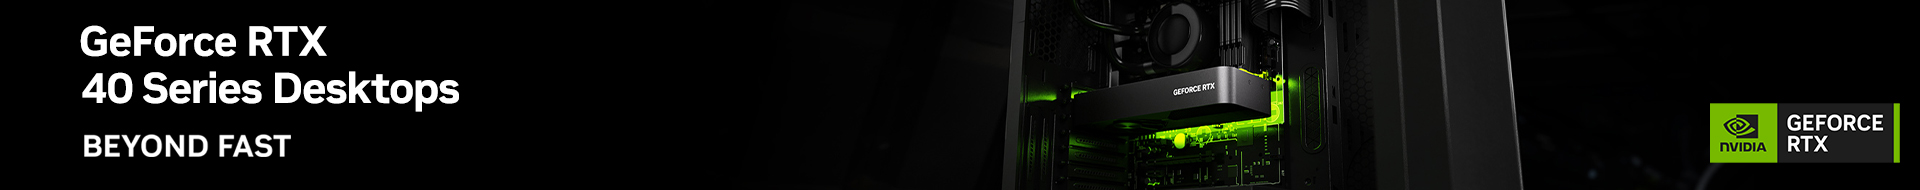 Nvidia Geforcertx30 Gamingdesktops 03.10.banner Btm